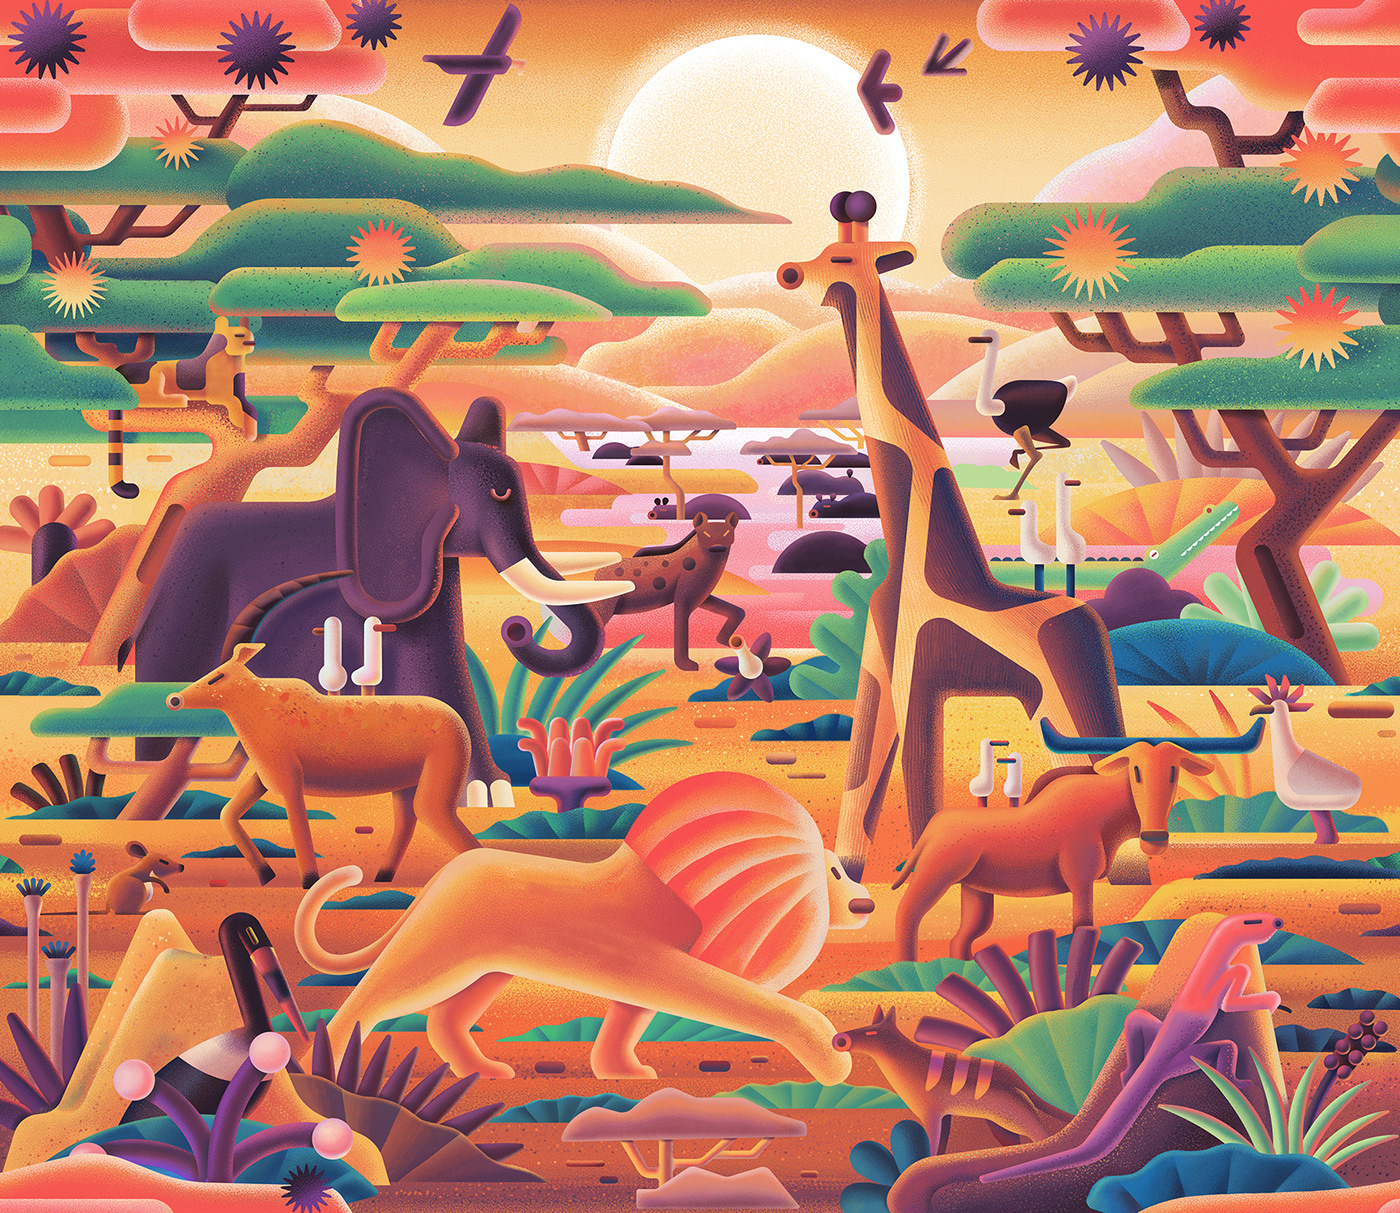 ILLUSTRATION  Digital Art  Nature safari animals digital illustration Landscape Travel affinity designer marymaka